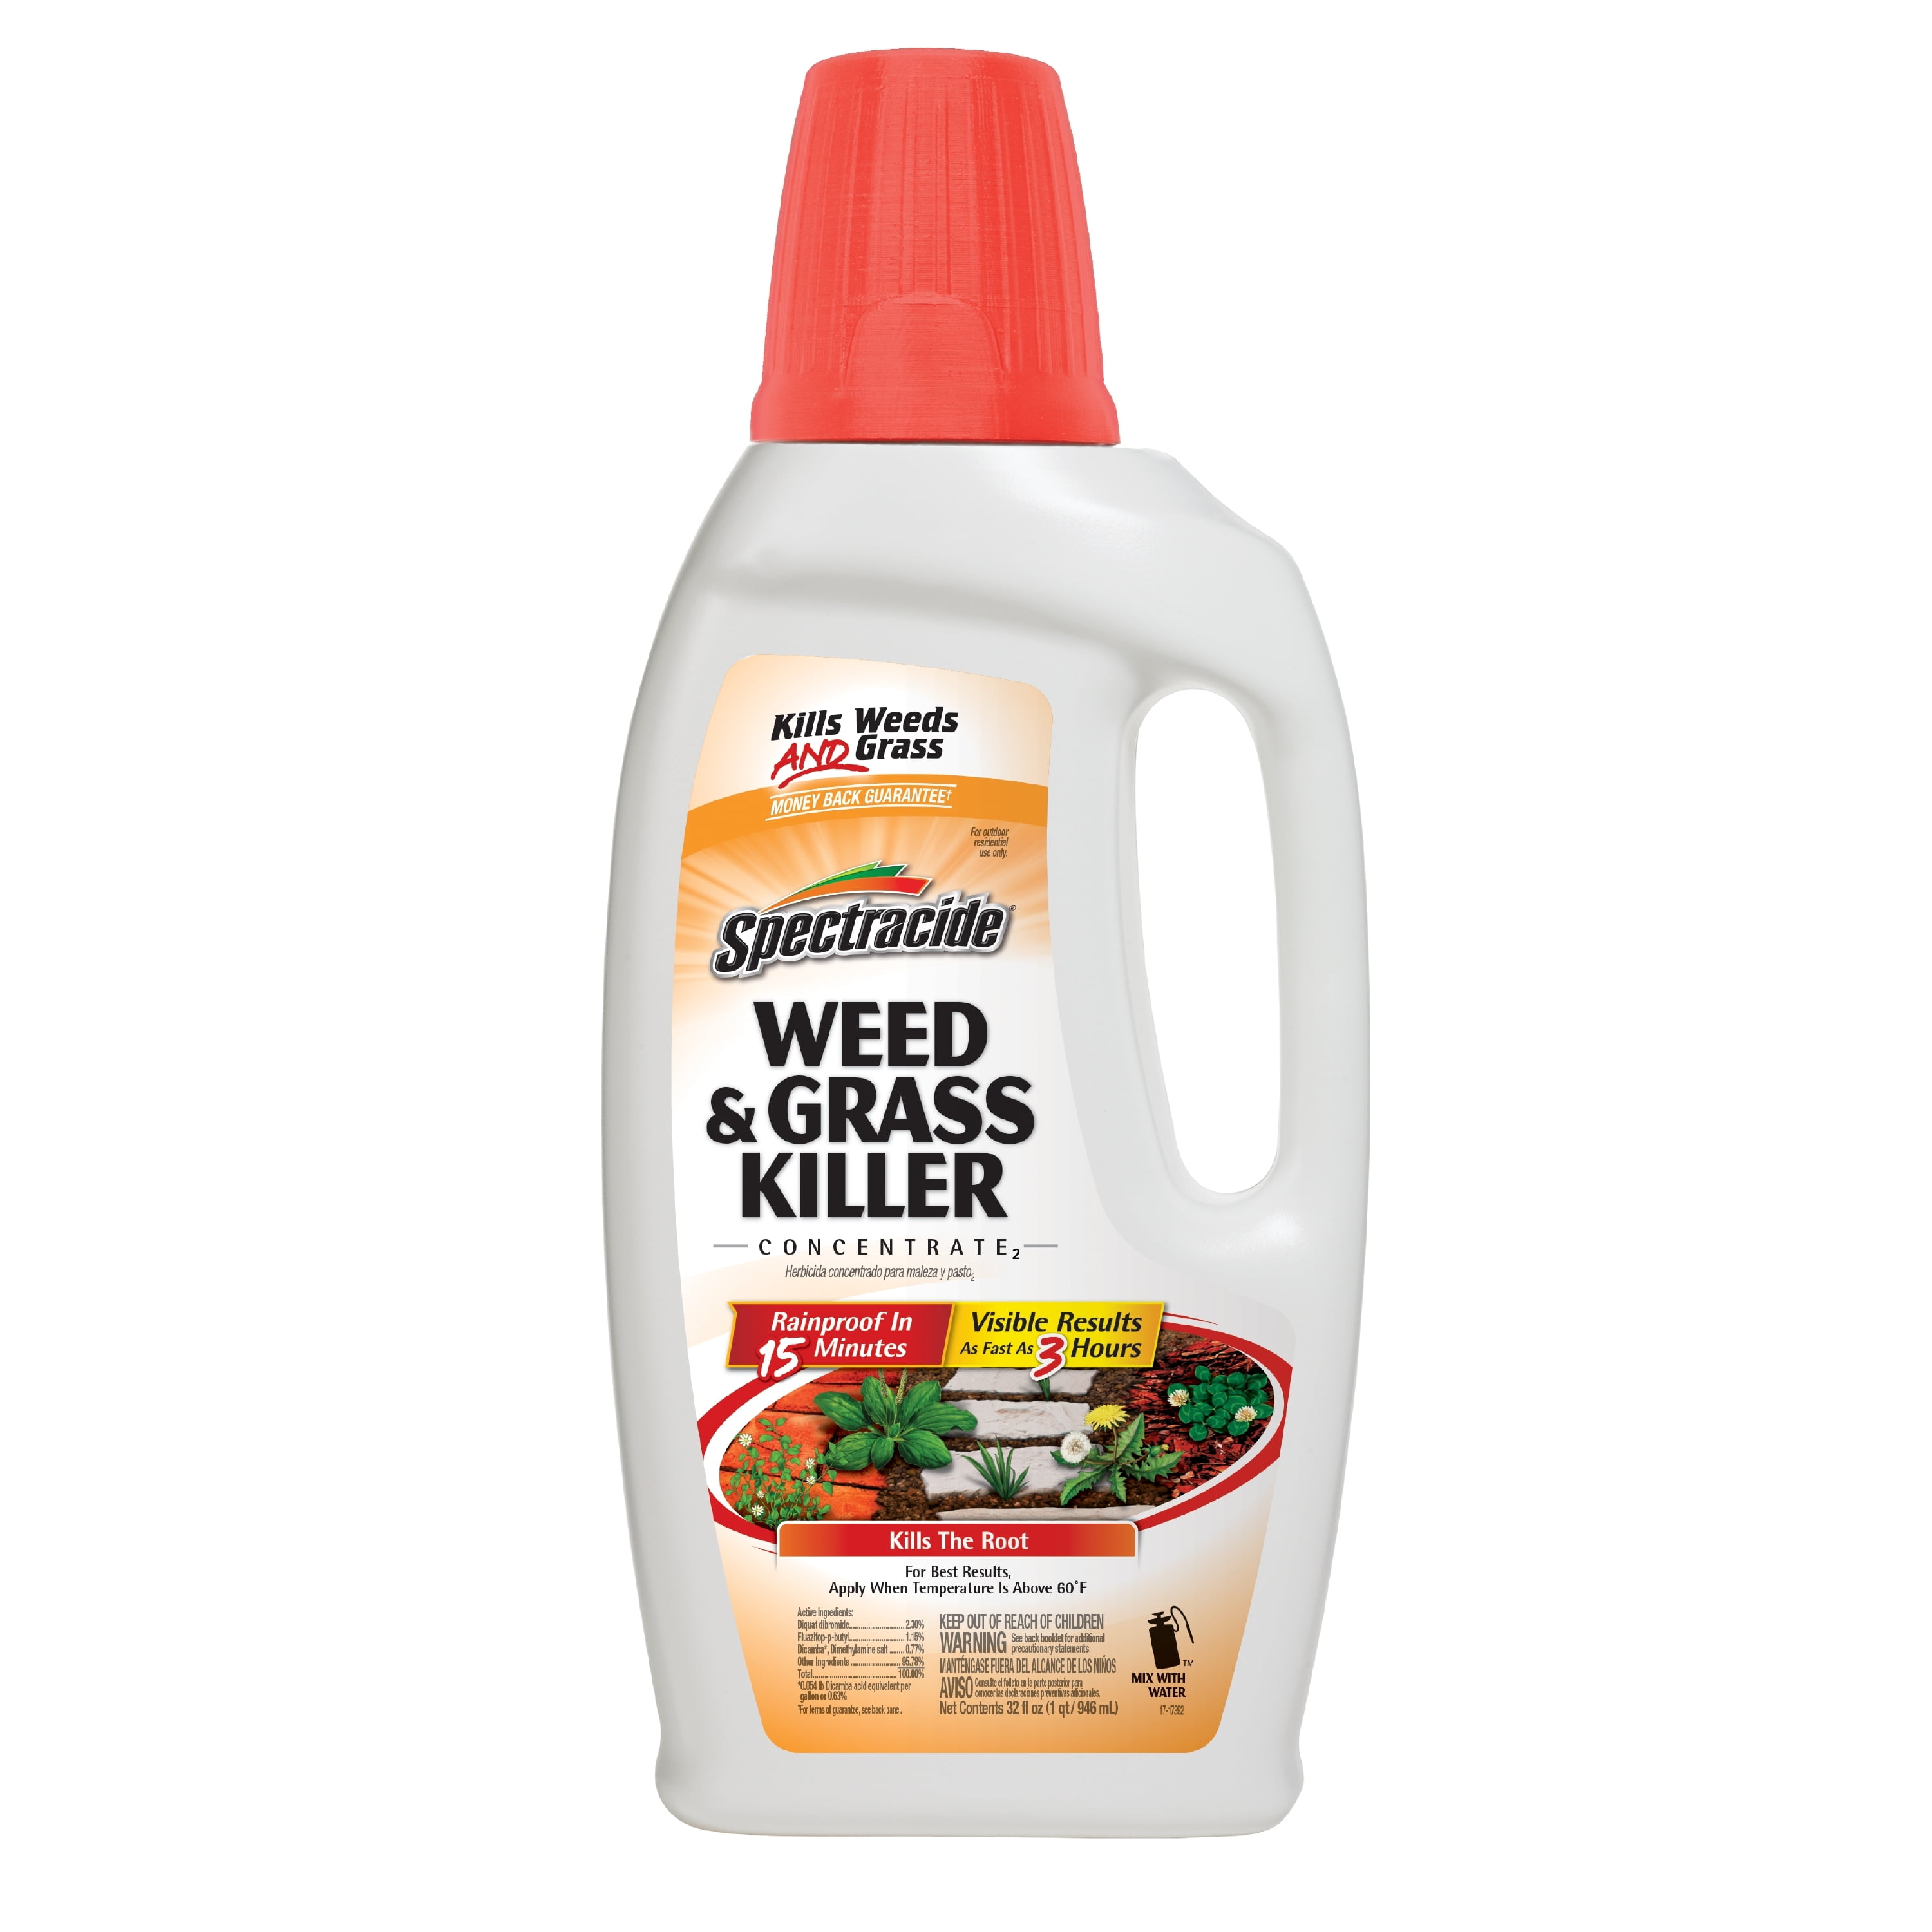 Spectracide Weed & Grass Killer Concentrate, 32-fl oz - Walmart.com